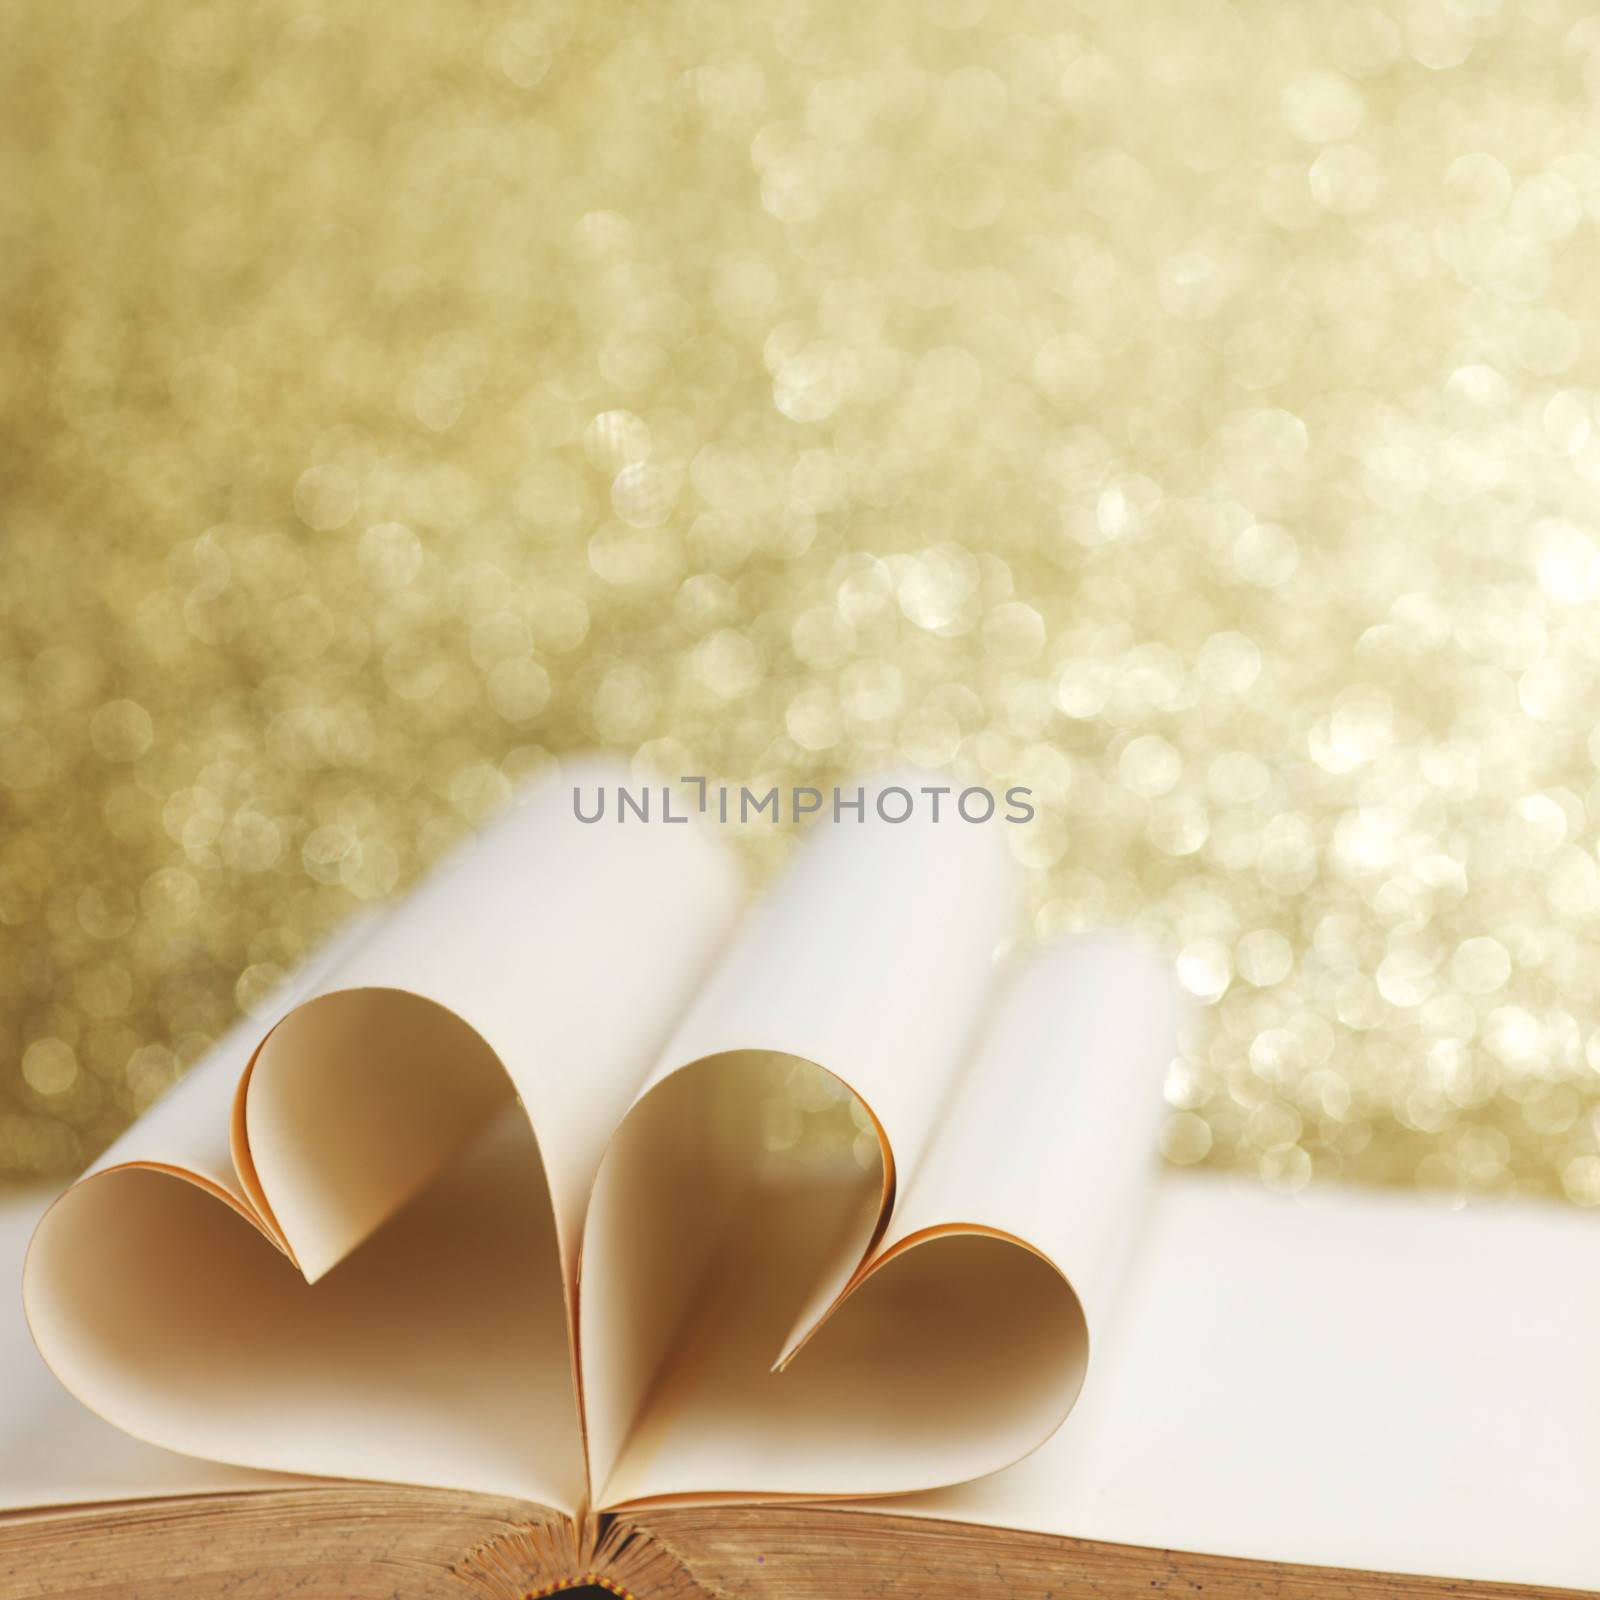 Heart inside a book by Yellowj